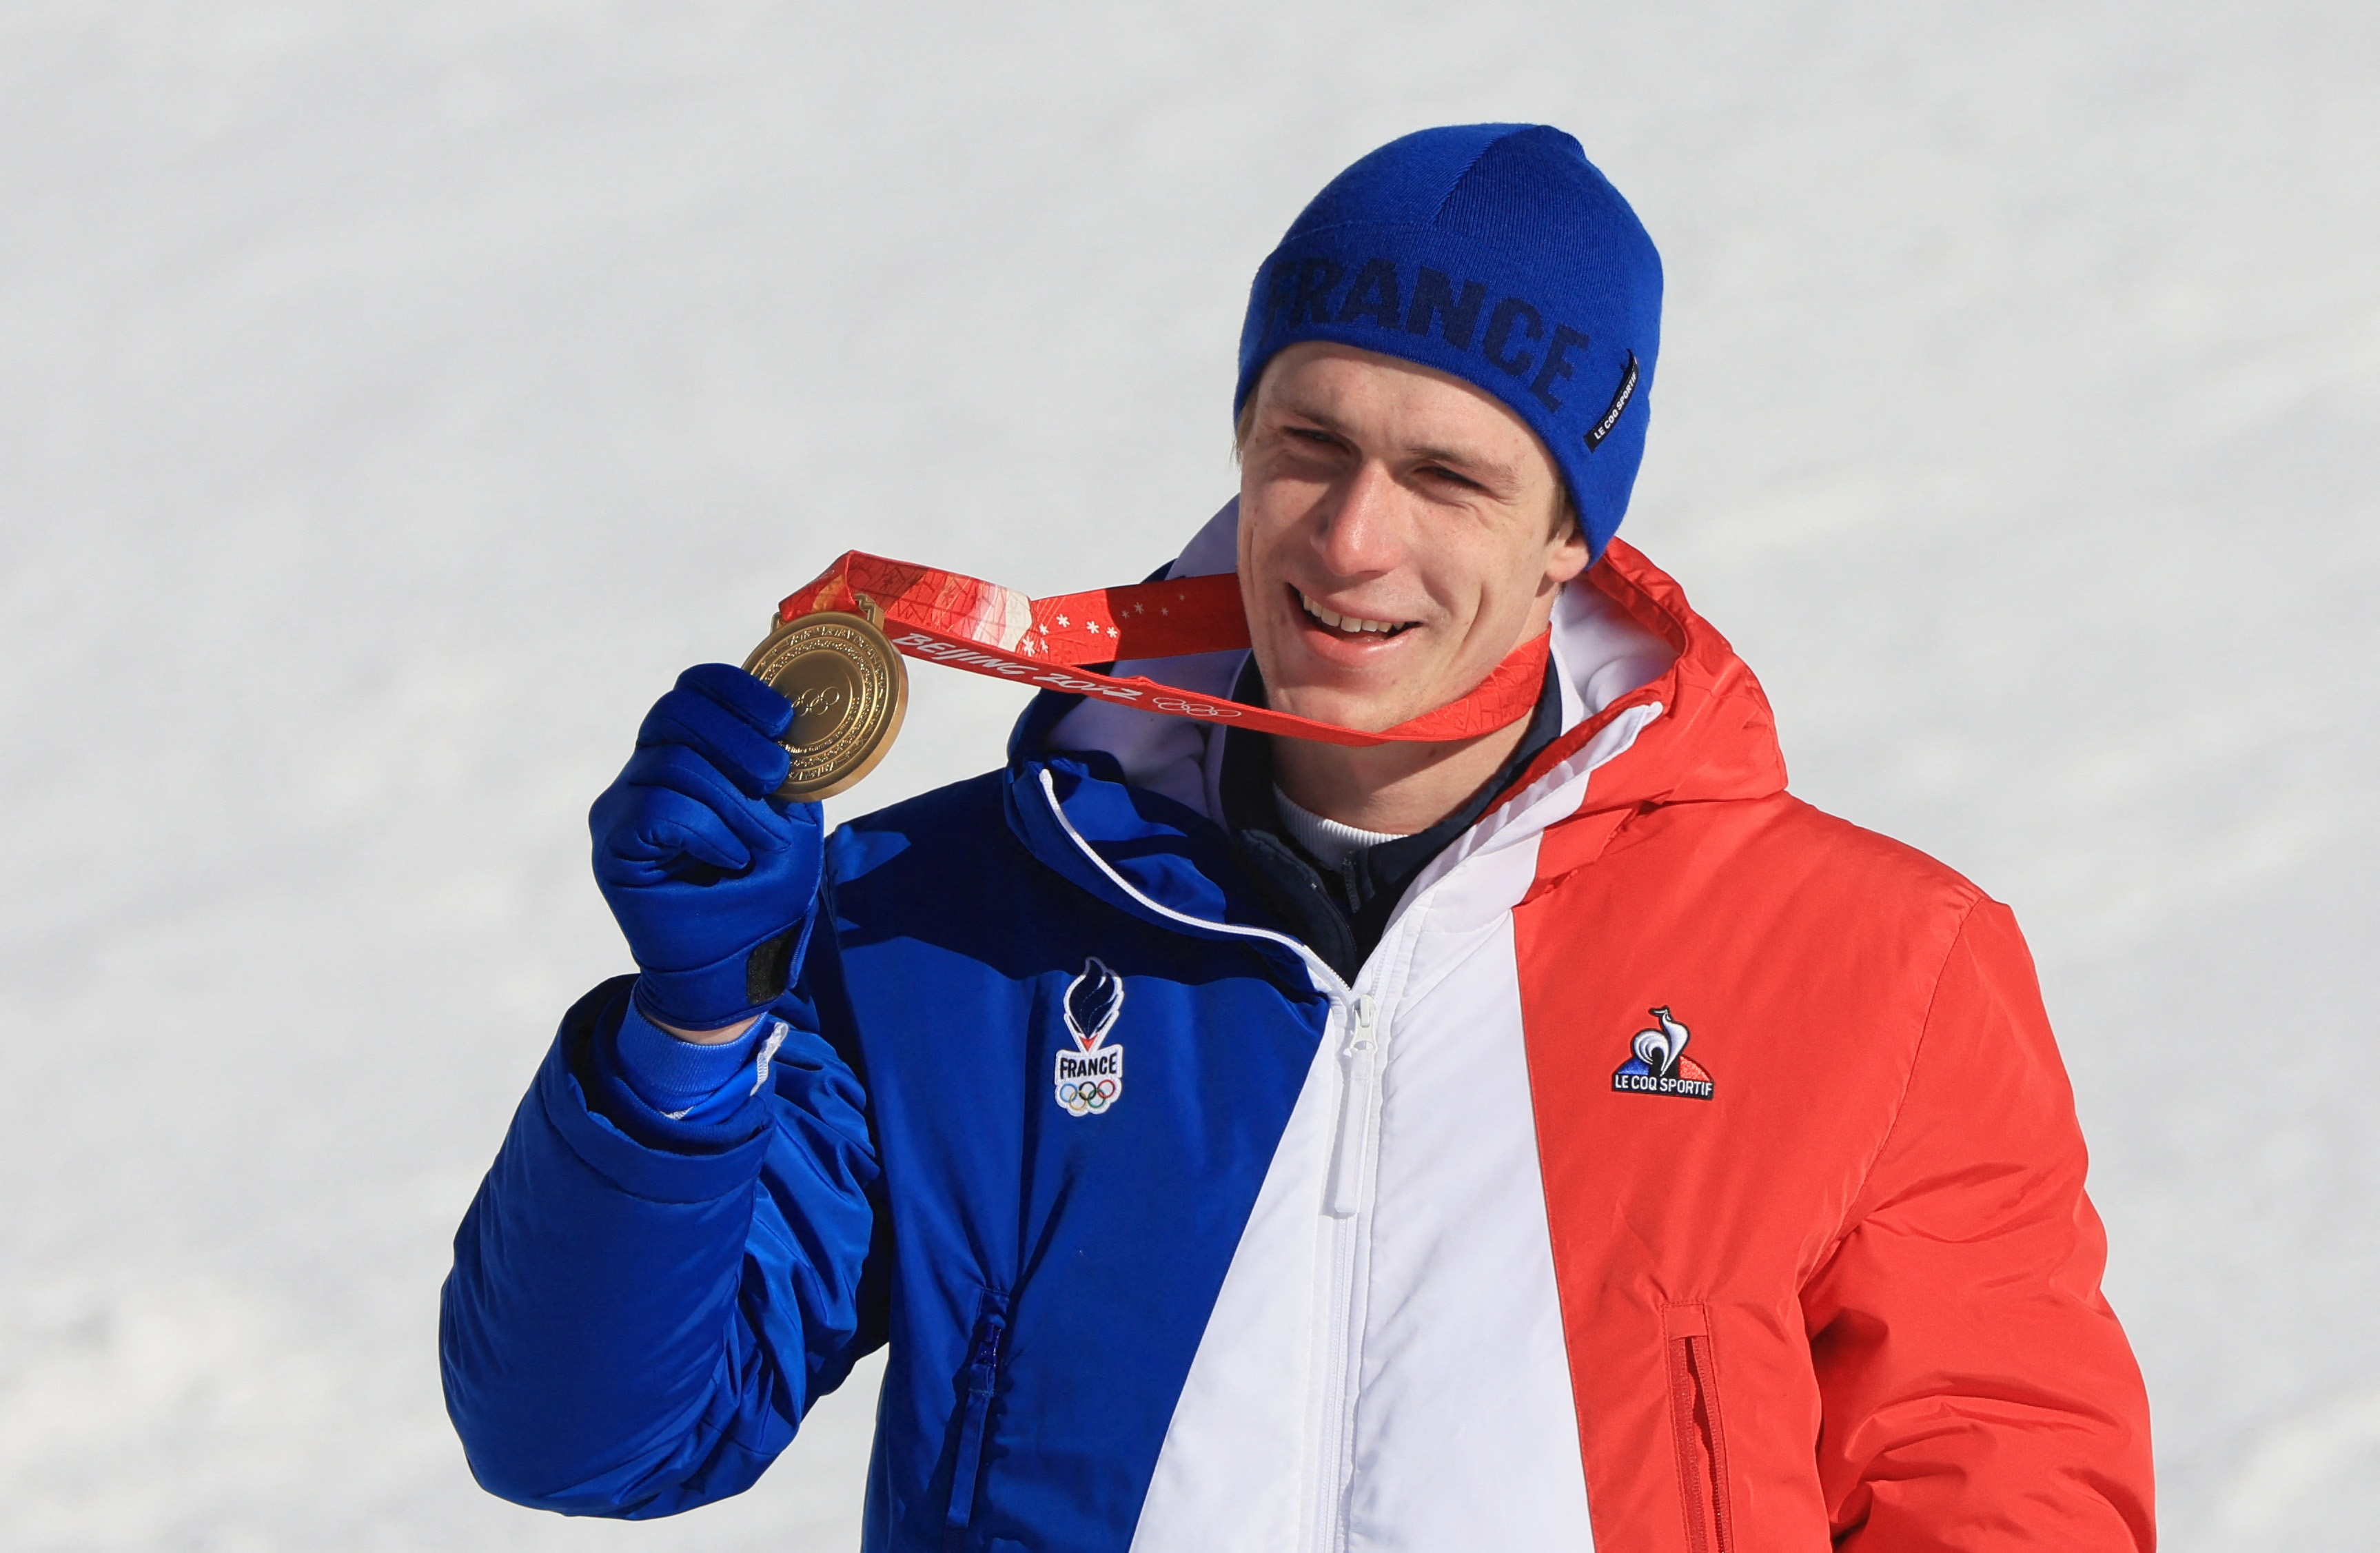 Victory Ceremony - Alpine Skiing - Men's Slalom